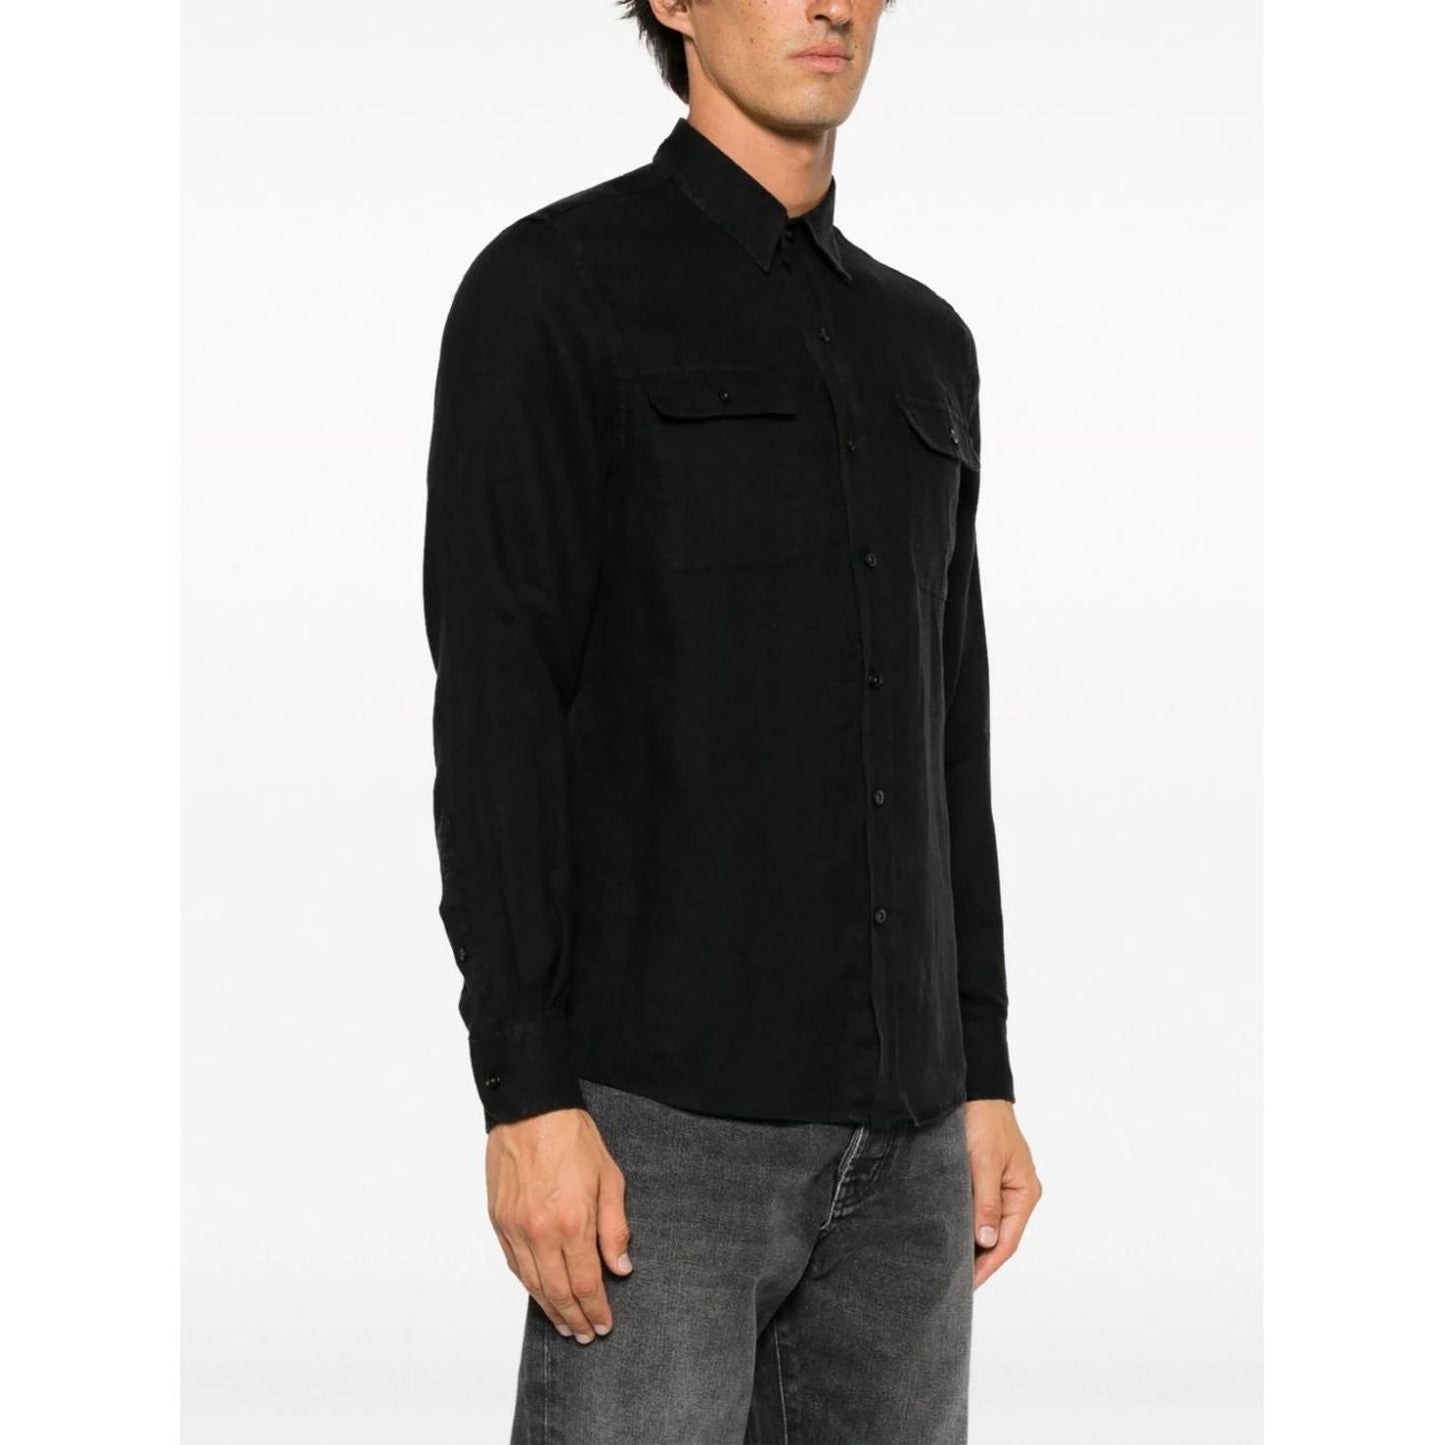 RALPH LAUREN PURPLE vyriški juodi marškinėliai ilgomis rankovėmis Long sleeve sport shirt